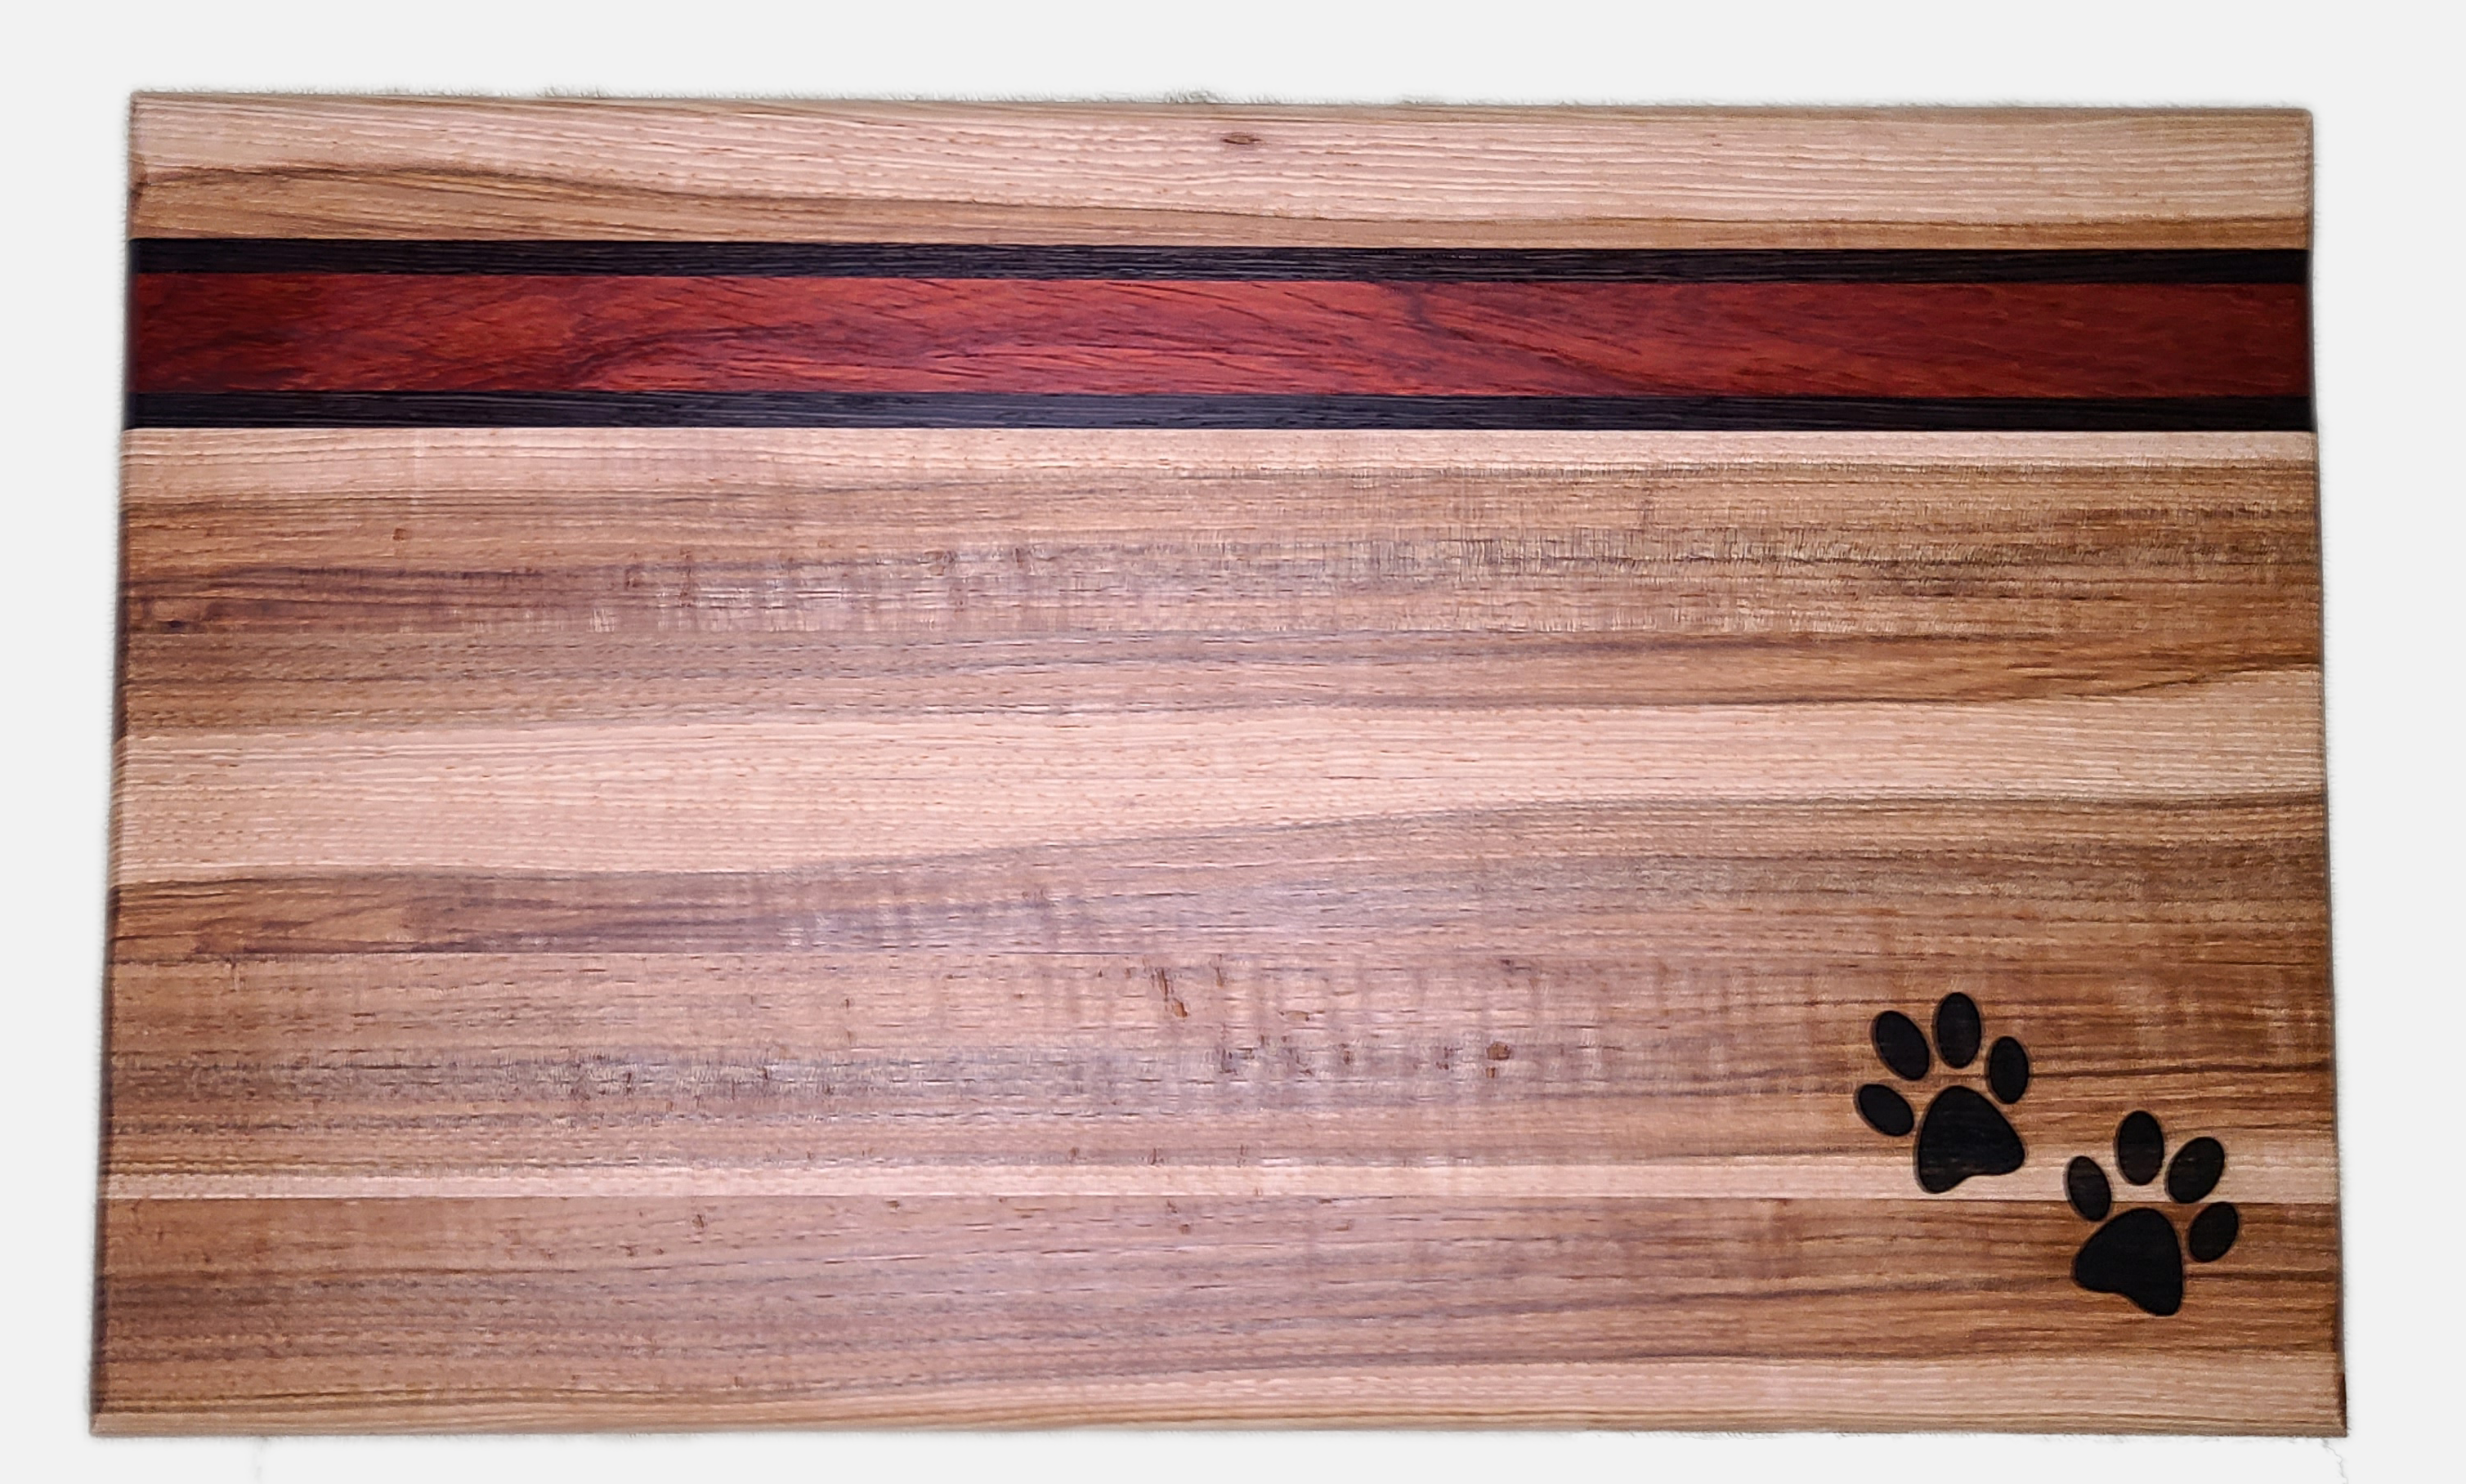 Hardwood cutting board and charcuterie board sets